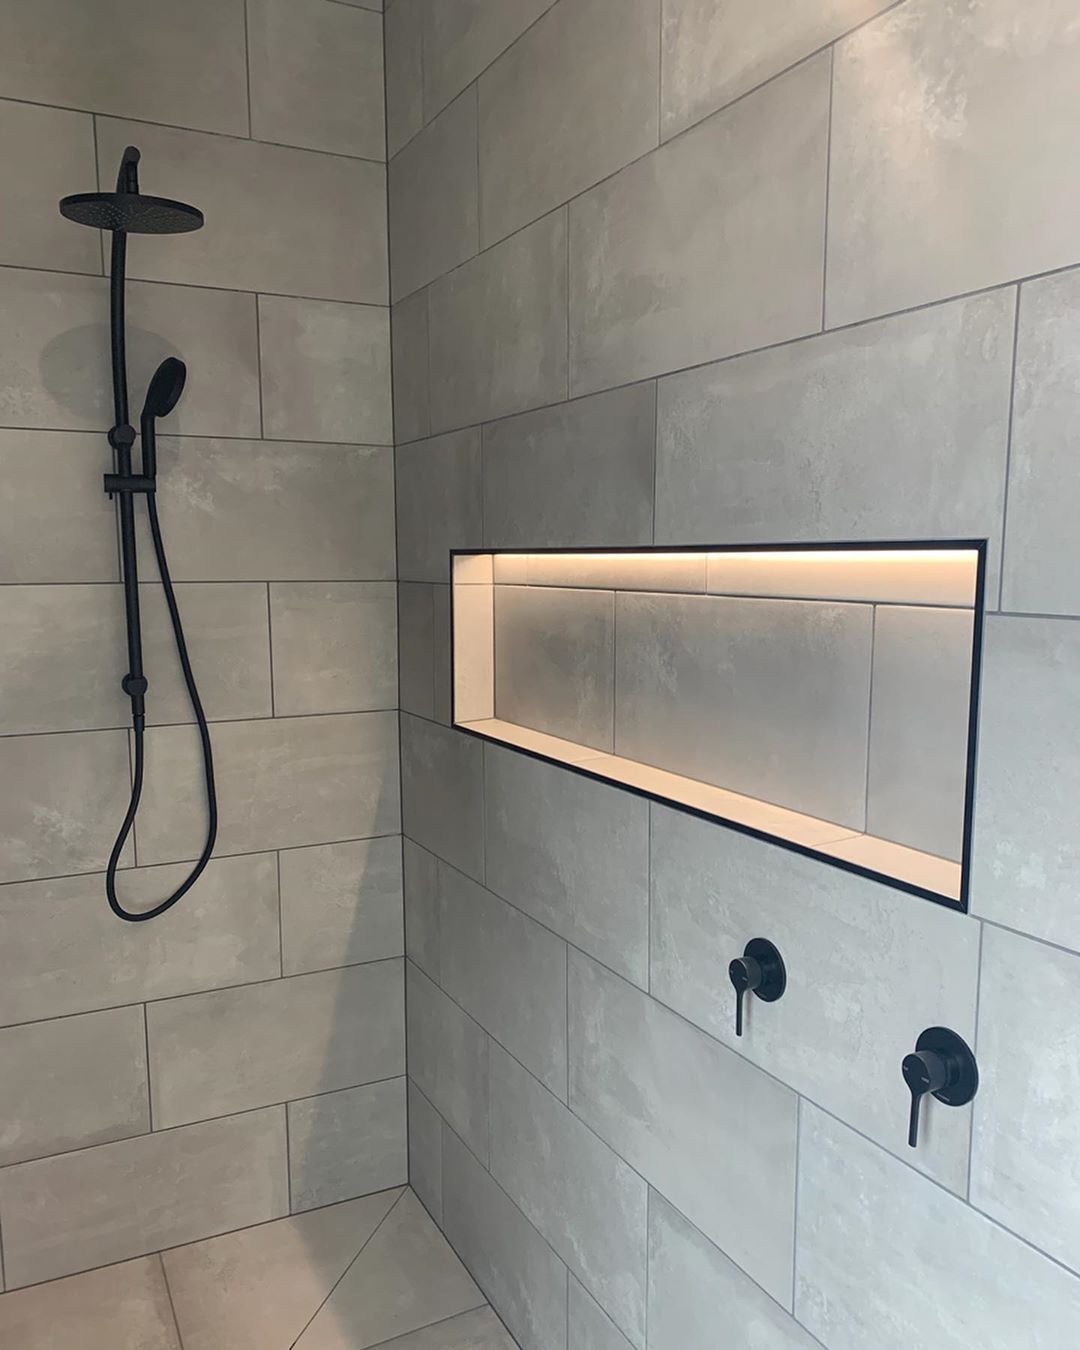 Led Bathroom Lighting: Beautiful And Modern